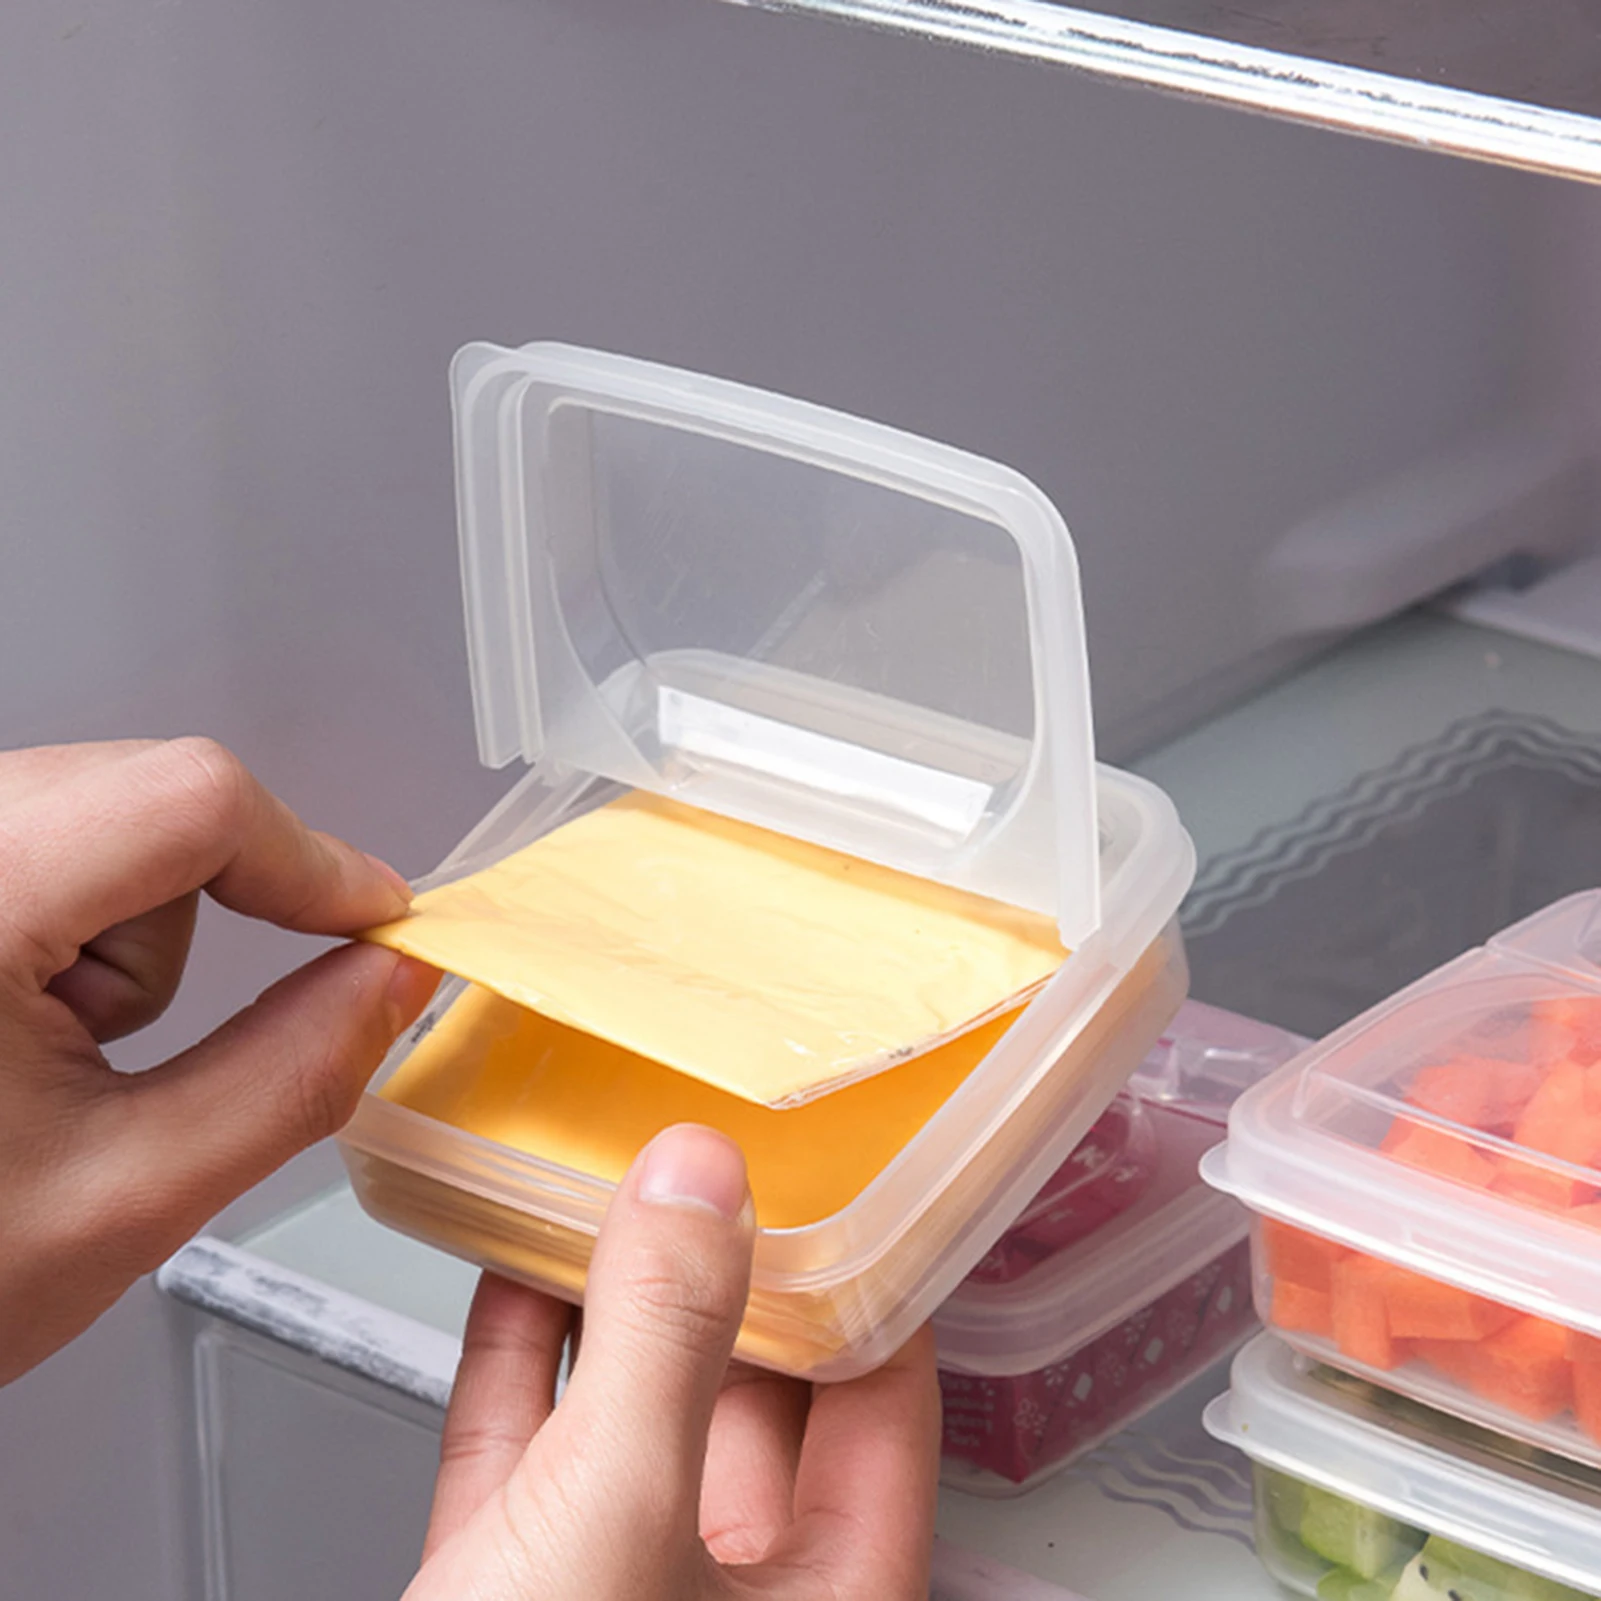 

1/2Pcs Cheese Slice Storage Box Fridge Butter Container Portable Refrigerator Fruit Vegetable Fresh-keeping Organizer Case New